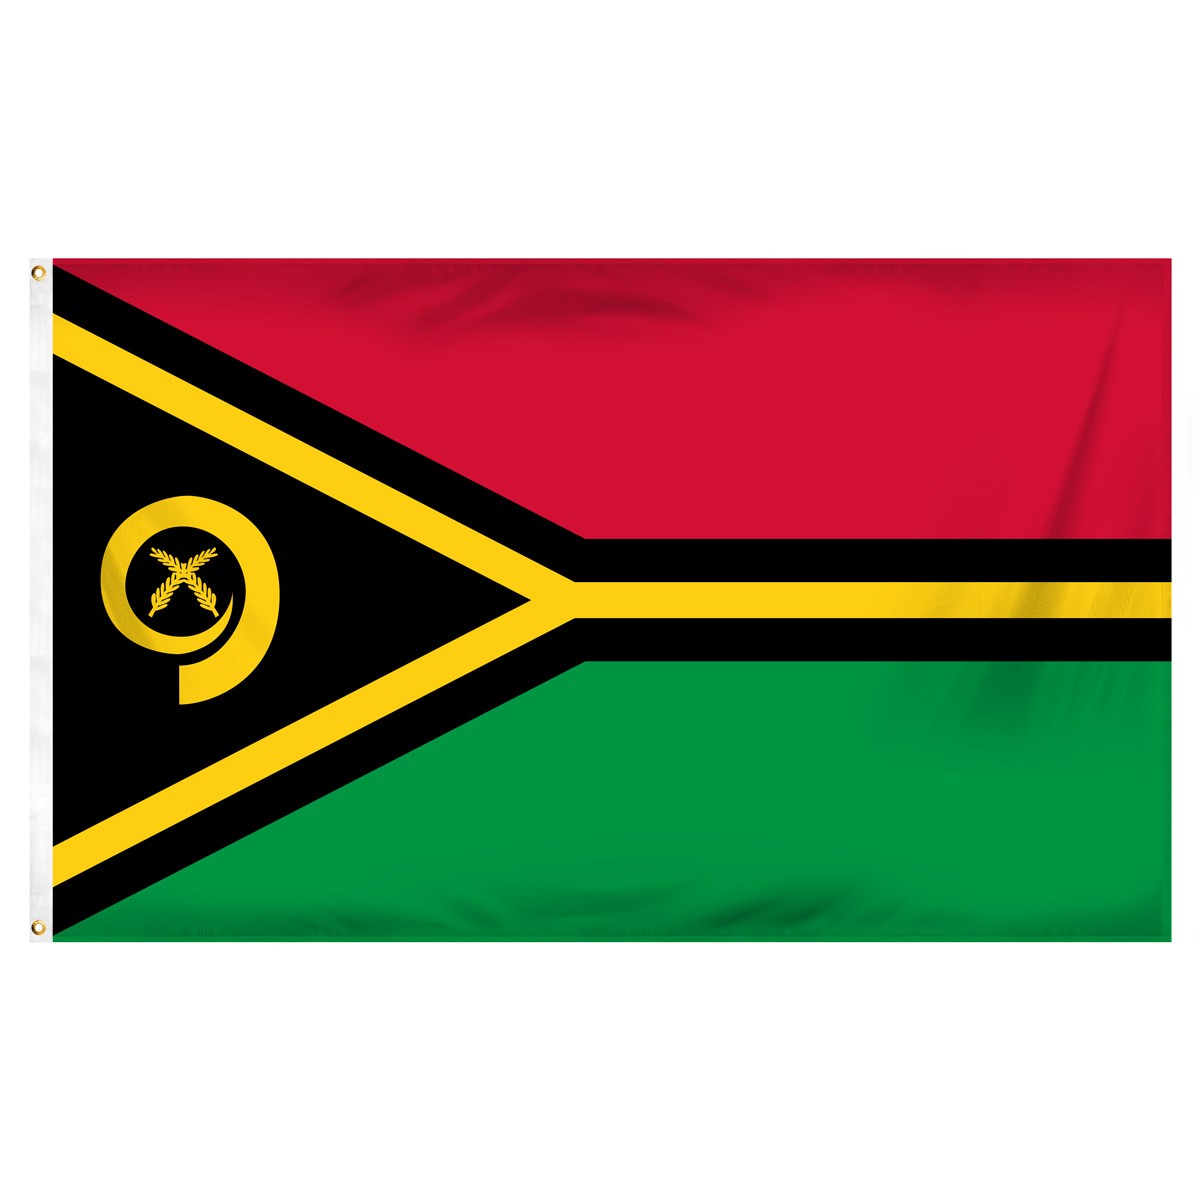 Vanuatu Posters and Banners